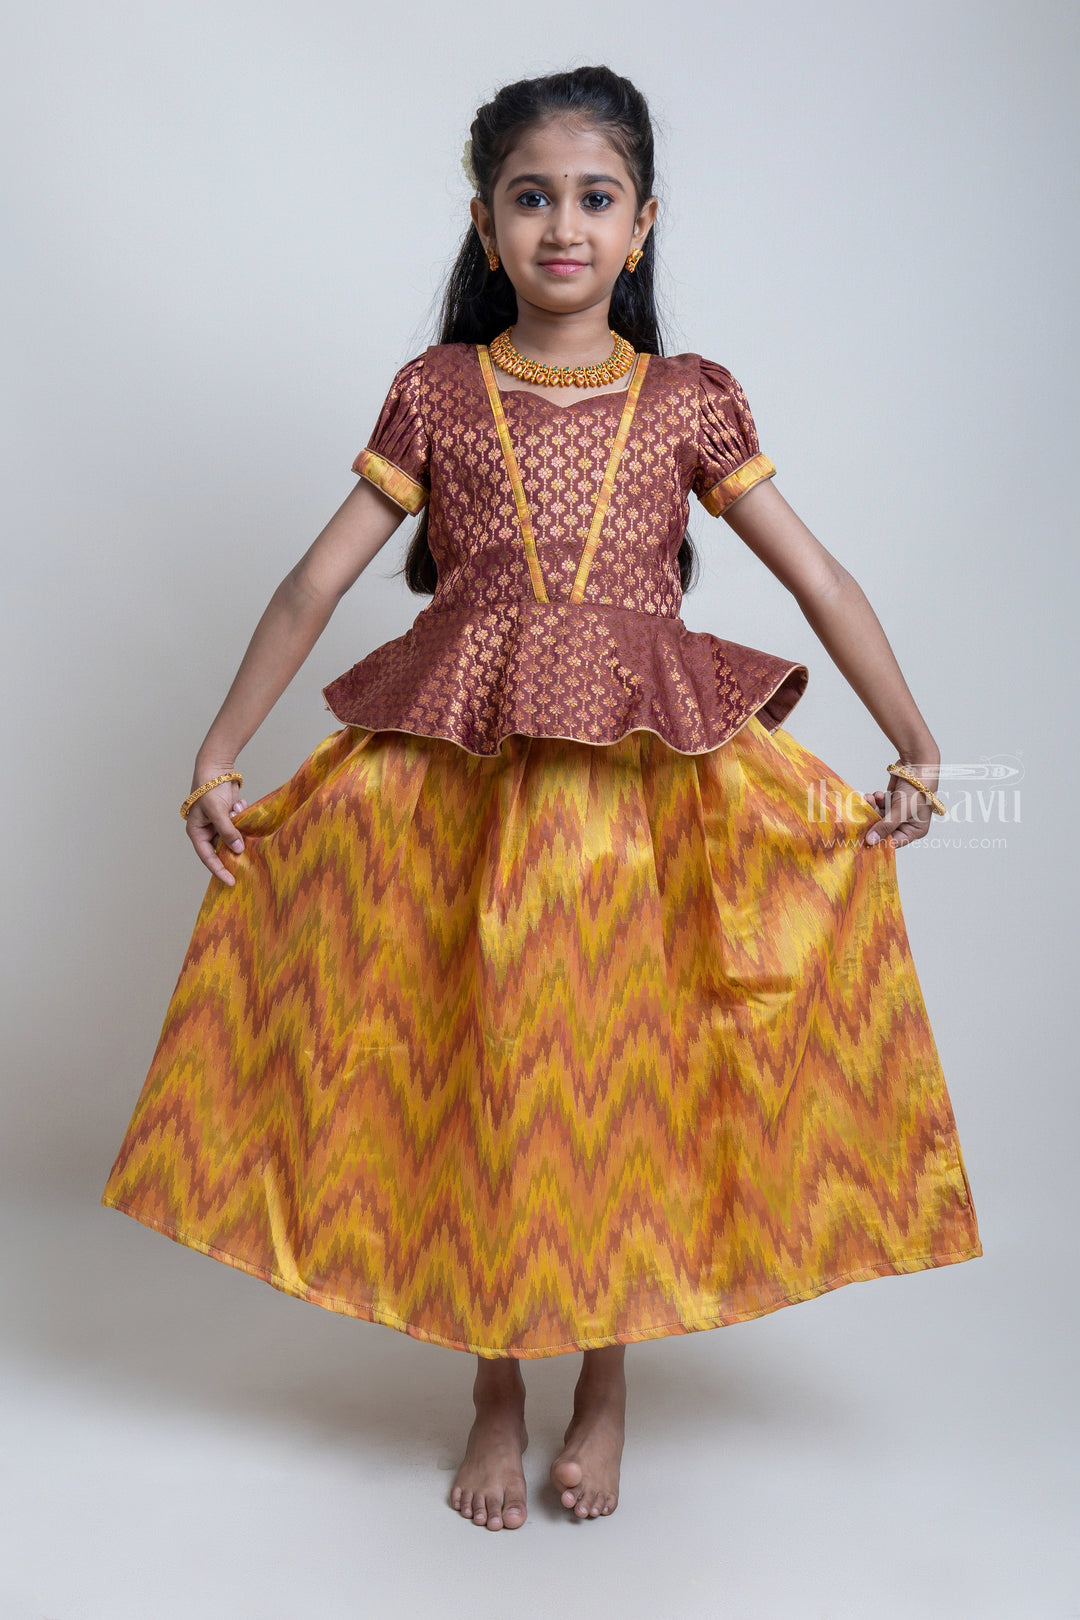 The Nesavu Pattu Pavadai Gorgeous Brown Floral Designed Silk Blouse With Ziz-Zag Pattu Pavadai For Girls Nesavu Traditional Wear For Girls | Latest Pattu Pavadai | The Nesavu